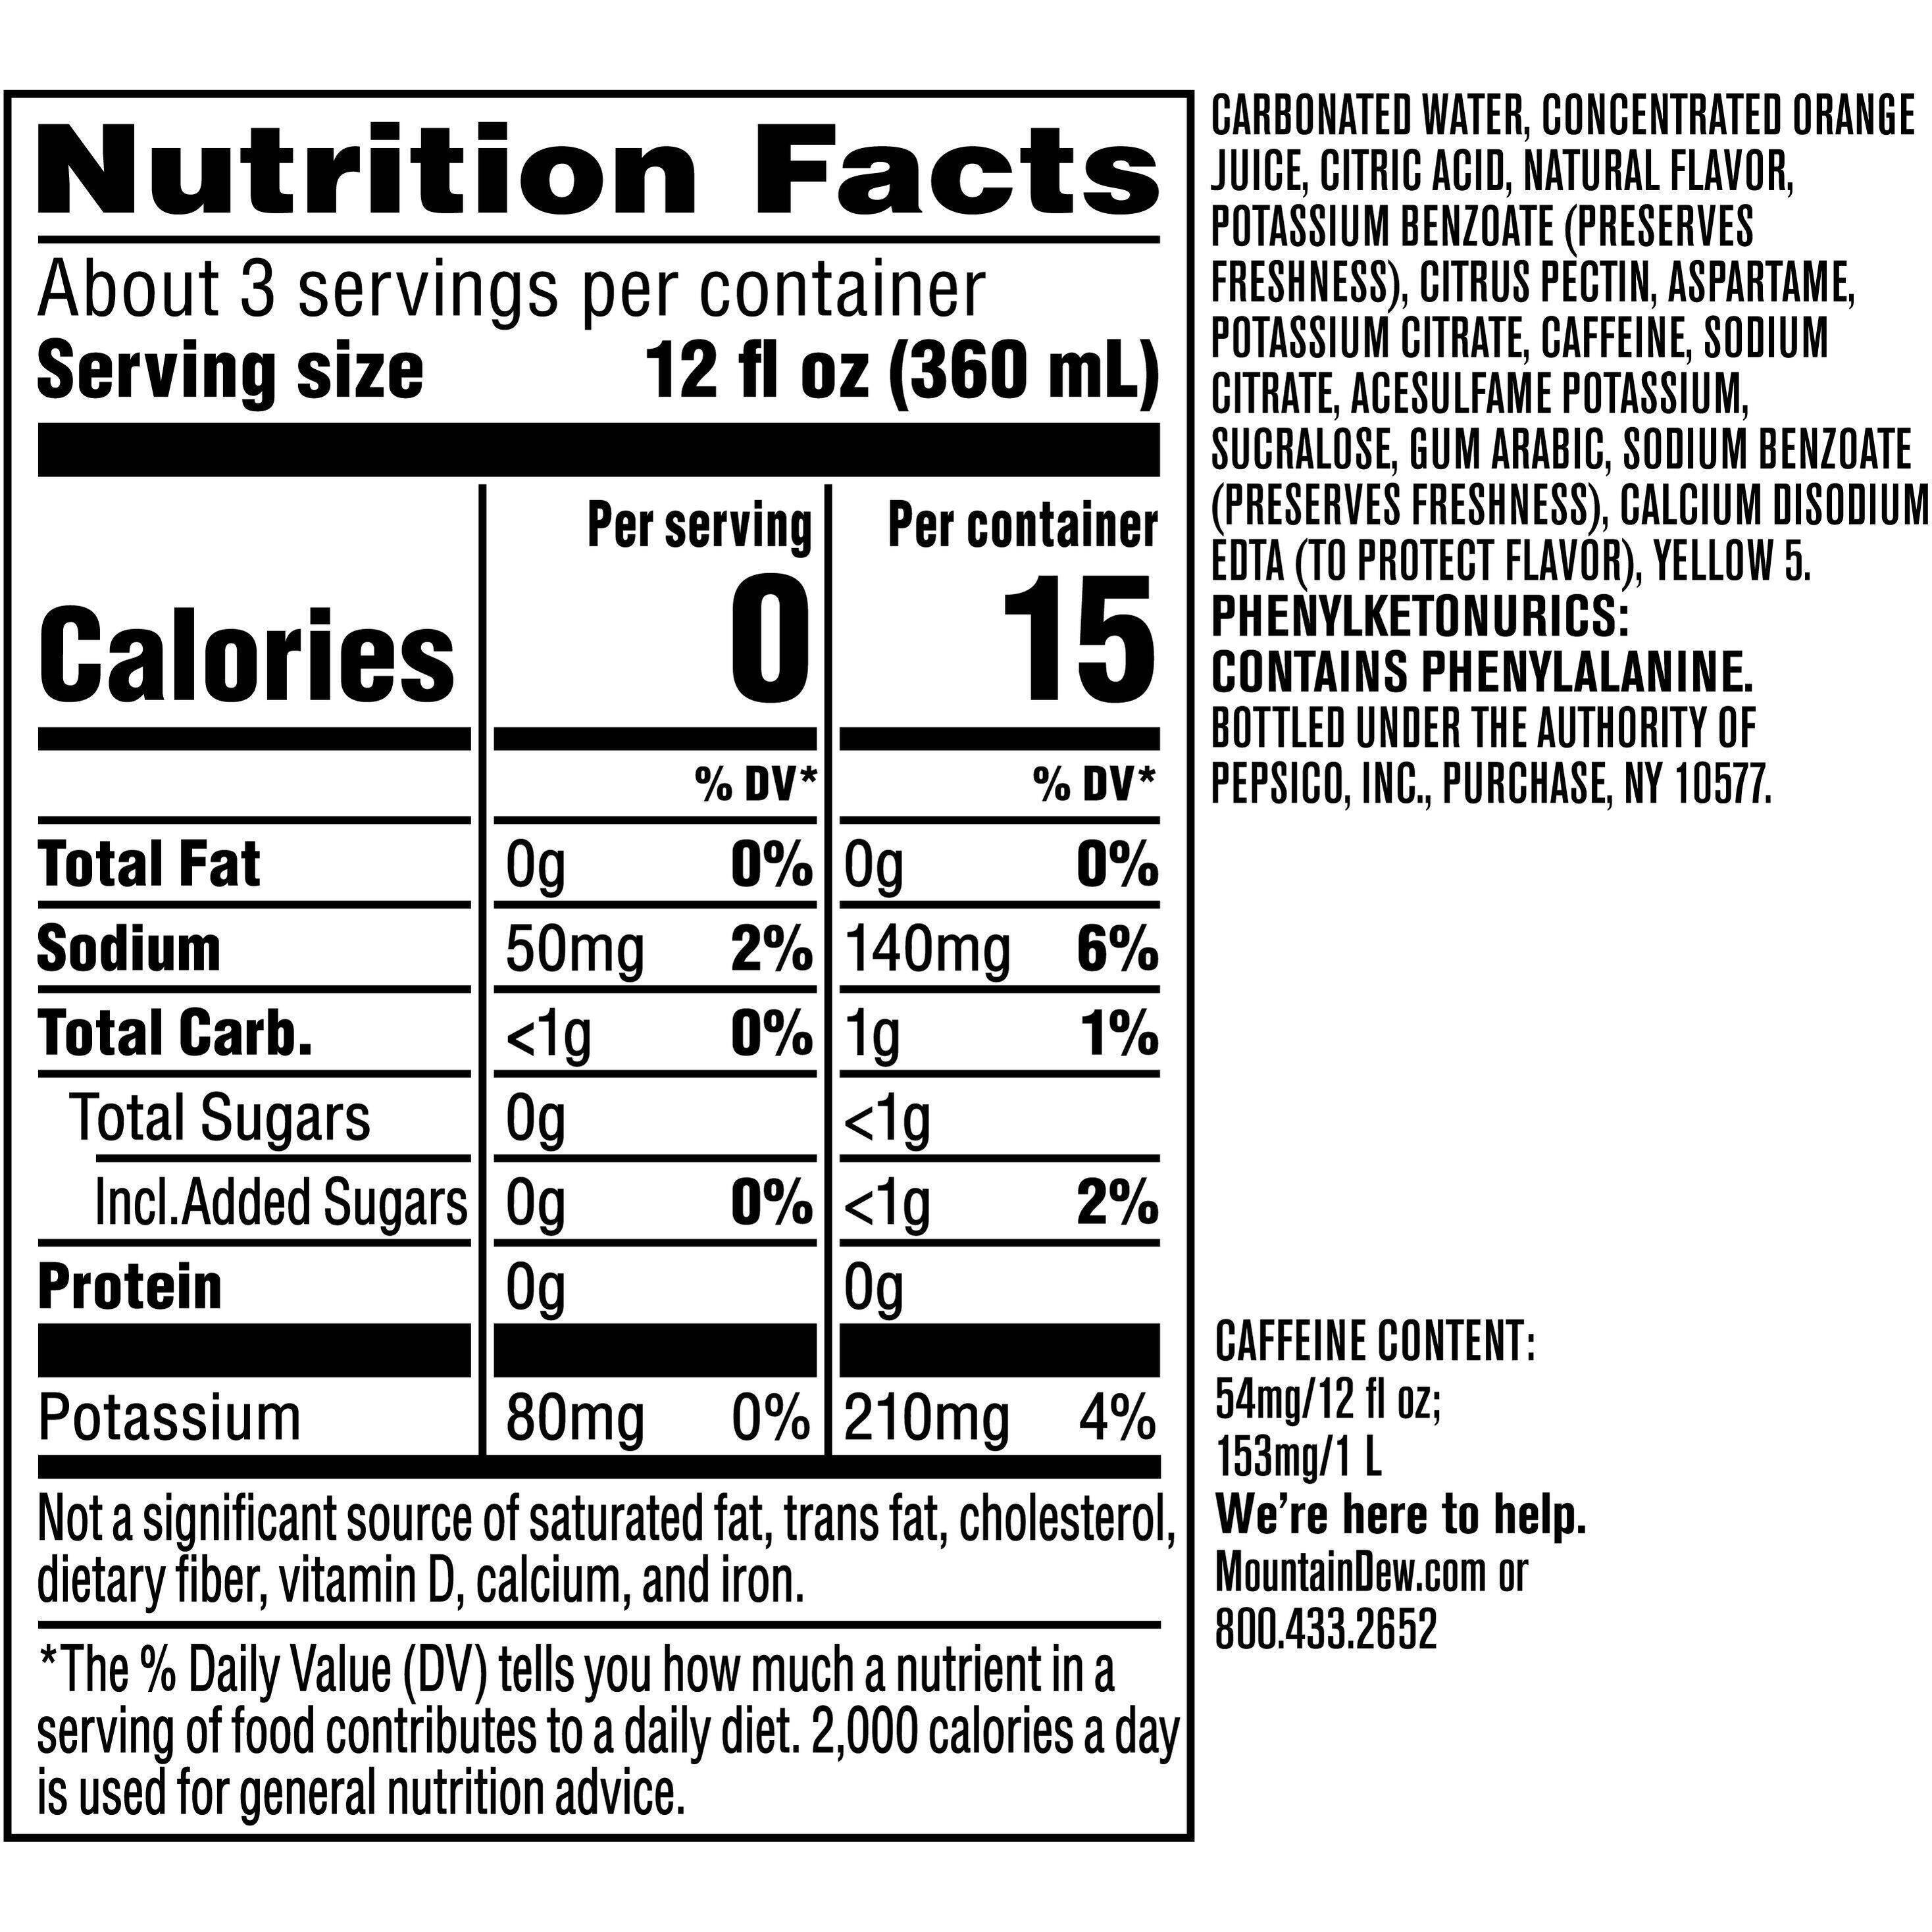 Image describing nutrition information for product Diet Mtn Dew